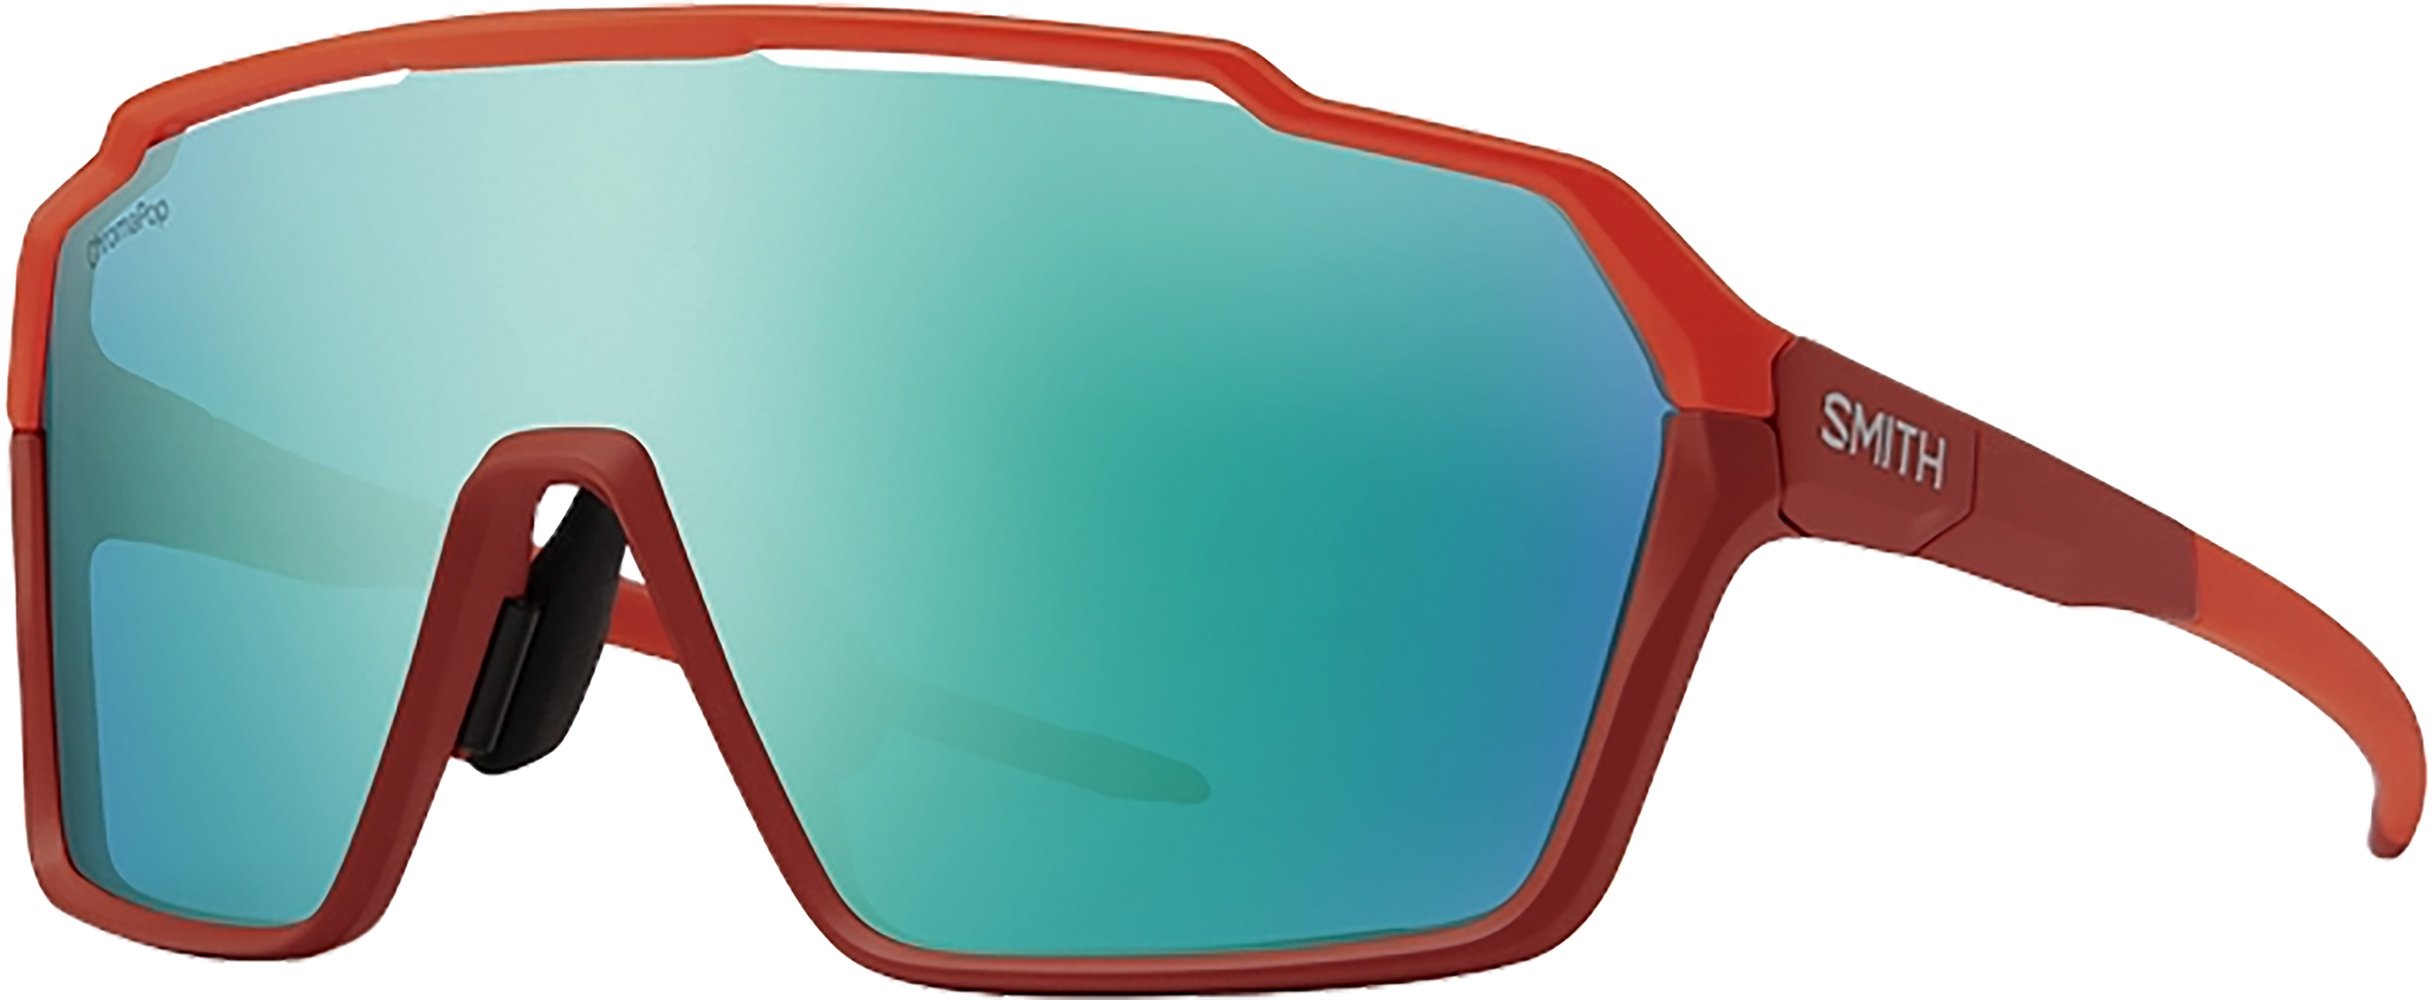 Smith Optics Shift XL MAG Sunglasses | The Last Hunt